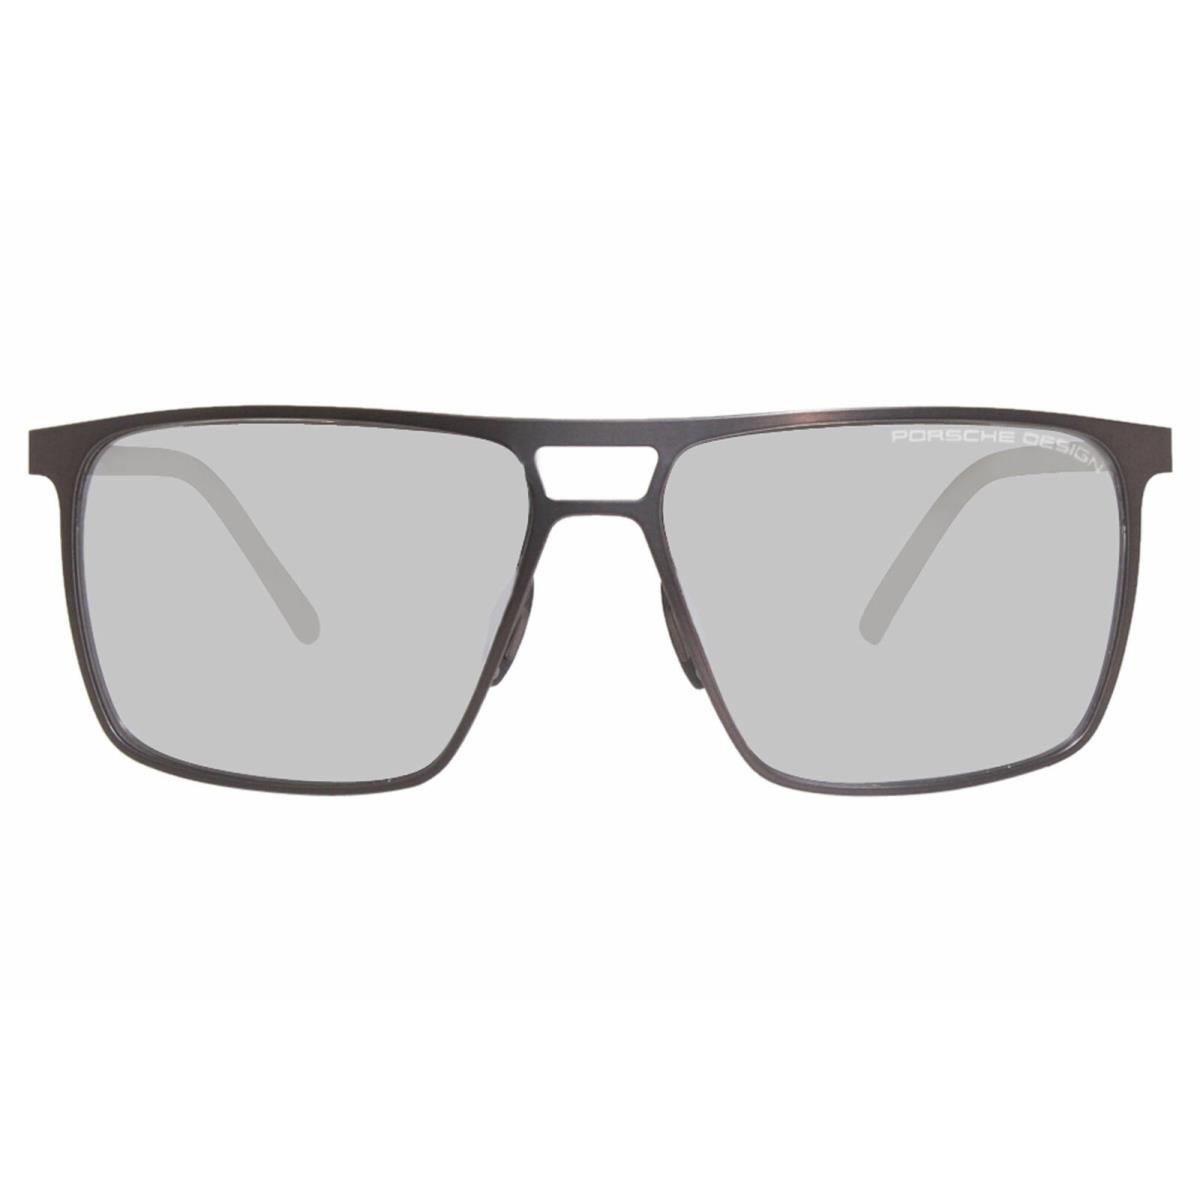 Porsche Design P8610-C Sunglasses Titanium Men`s Brown/grey/silver Mirror 59mm